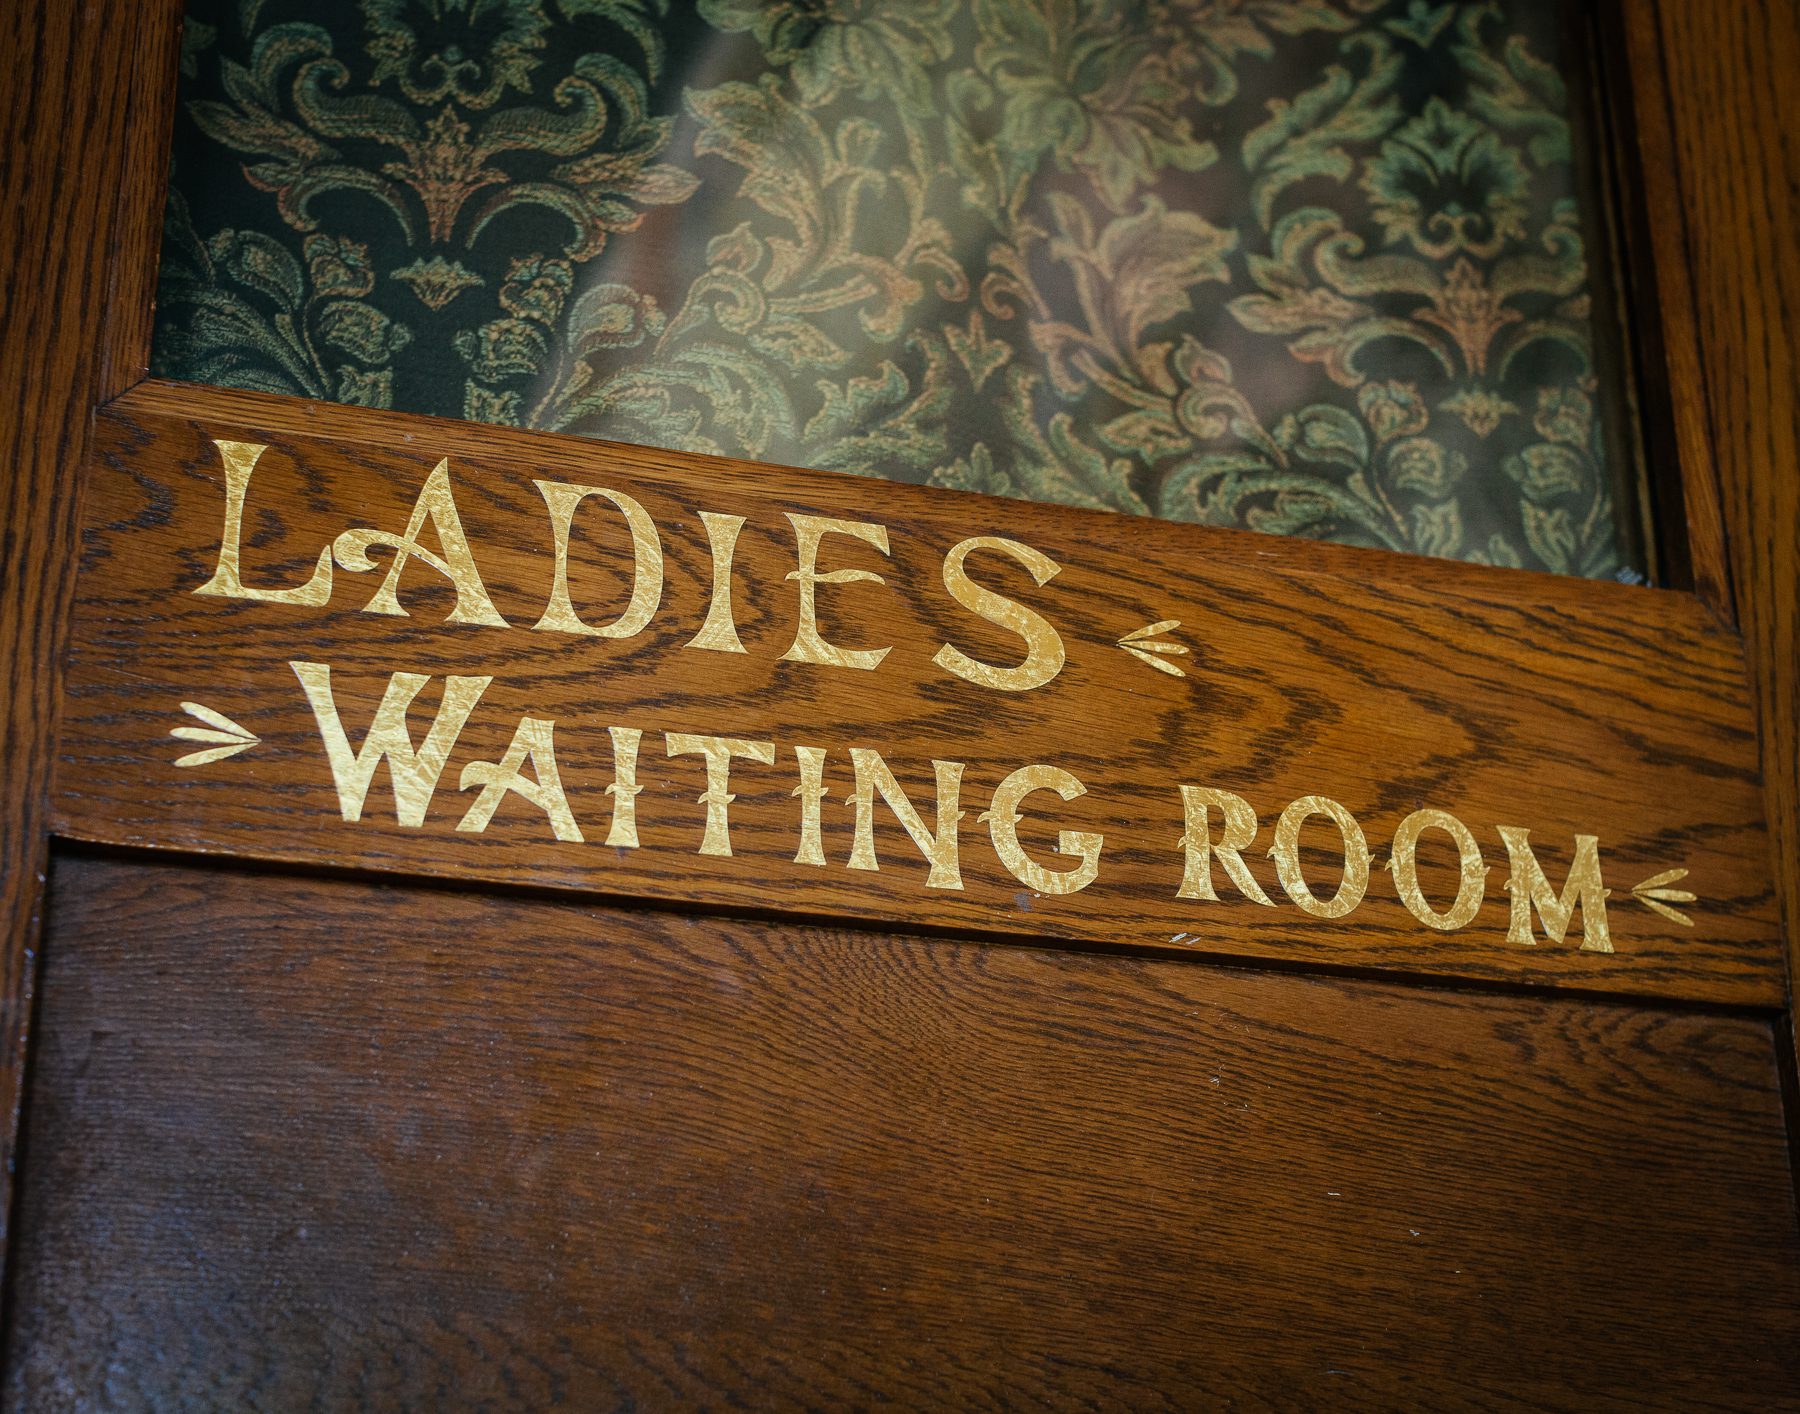 An original door of the Kingsville station reading “Ladies Waiting Room”.